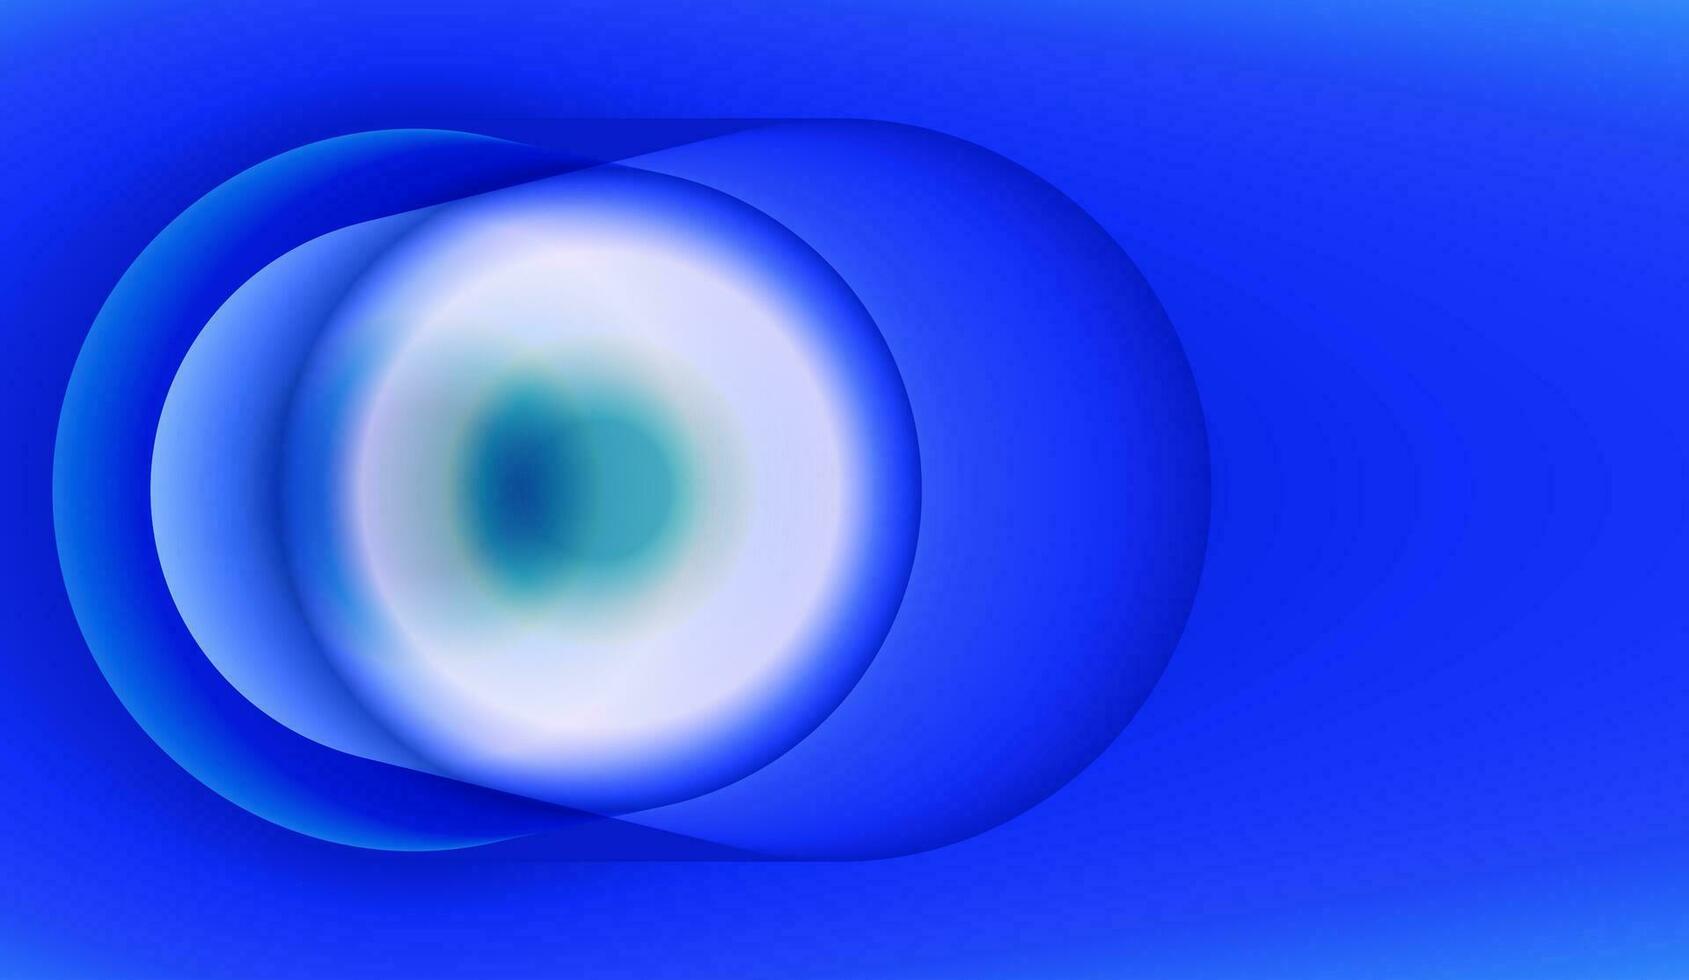 resumen azul antecedentes con 3d circulo geométrico forma. 3d esfera forma ligero azul. creativo mínimo buble de moda degradado modelo para cubrir folleto, volantes, póster, bandera web. vector